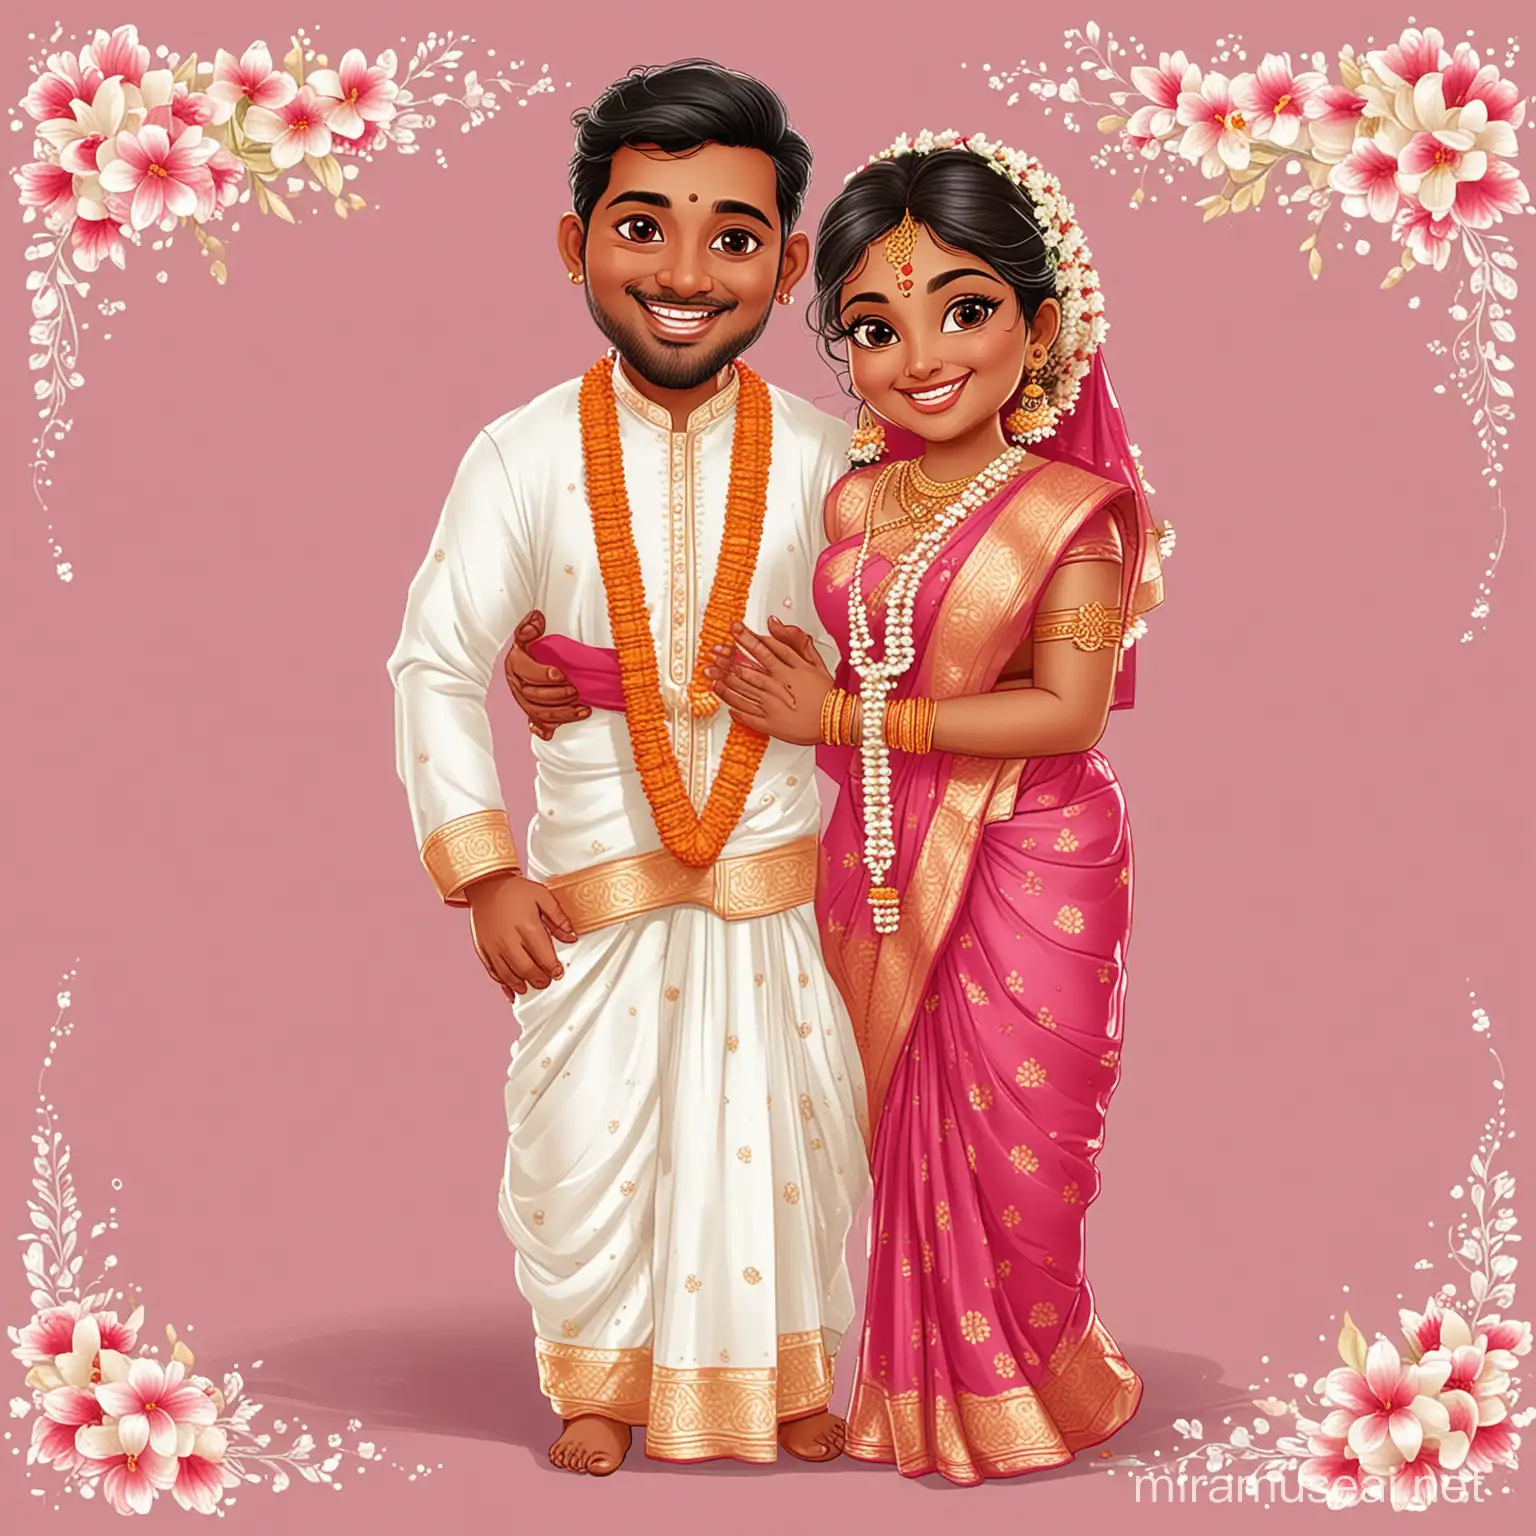 Joyful Cartoon Tamil Bride and Groom in Traditional Wedding Attire with Flowers